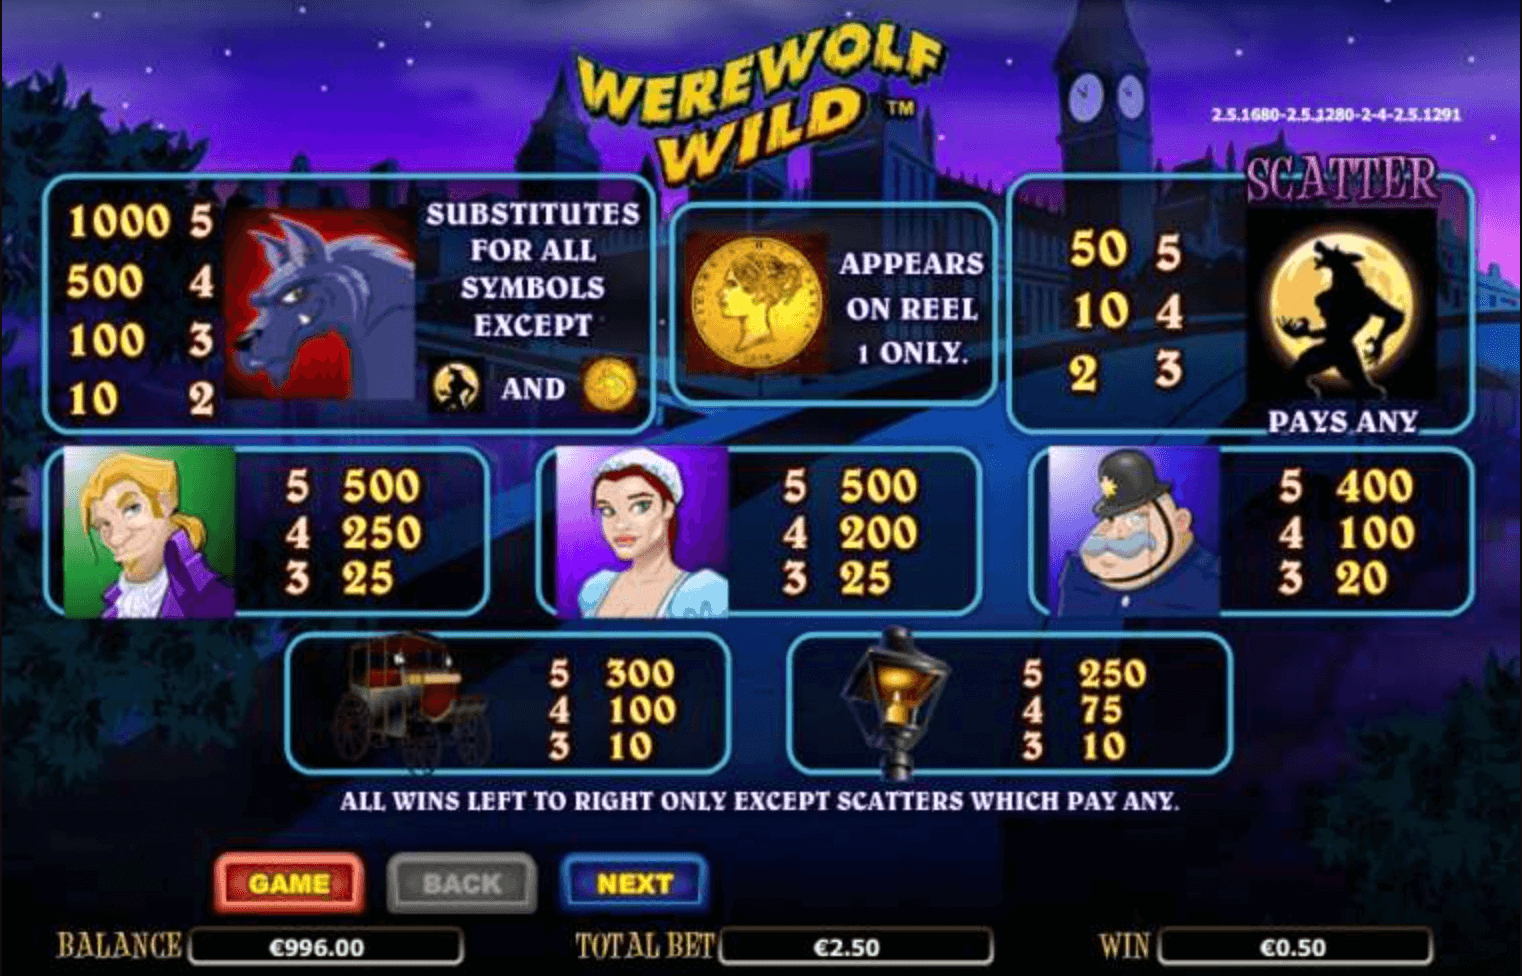 Werewolf Wild Processo do jogo